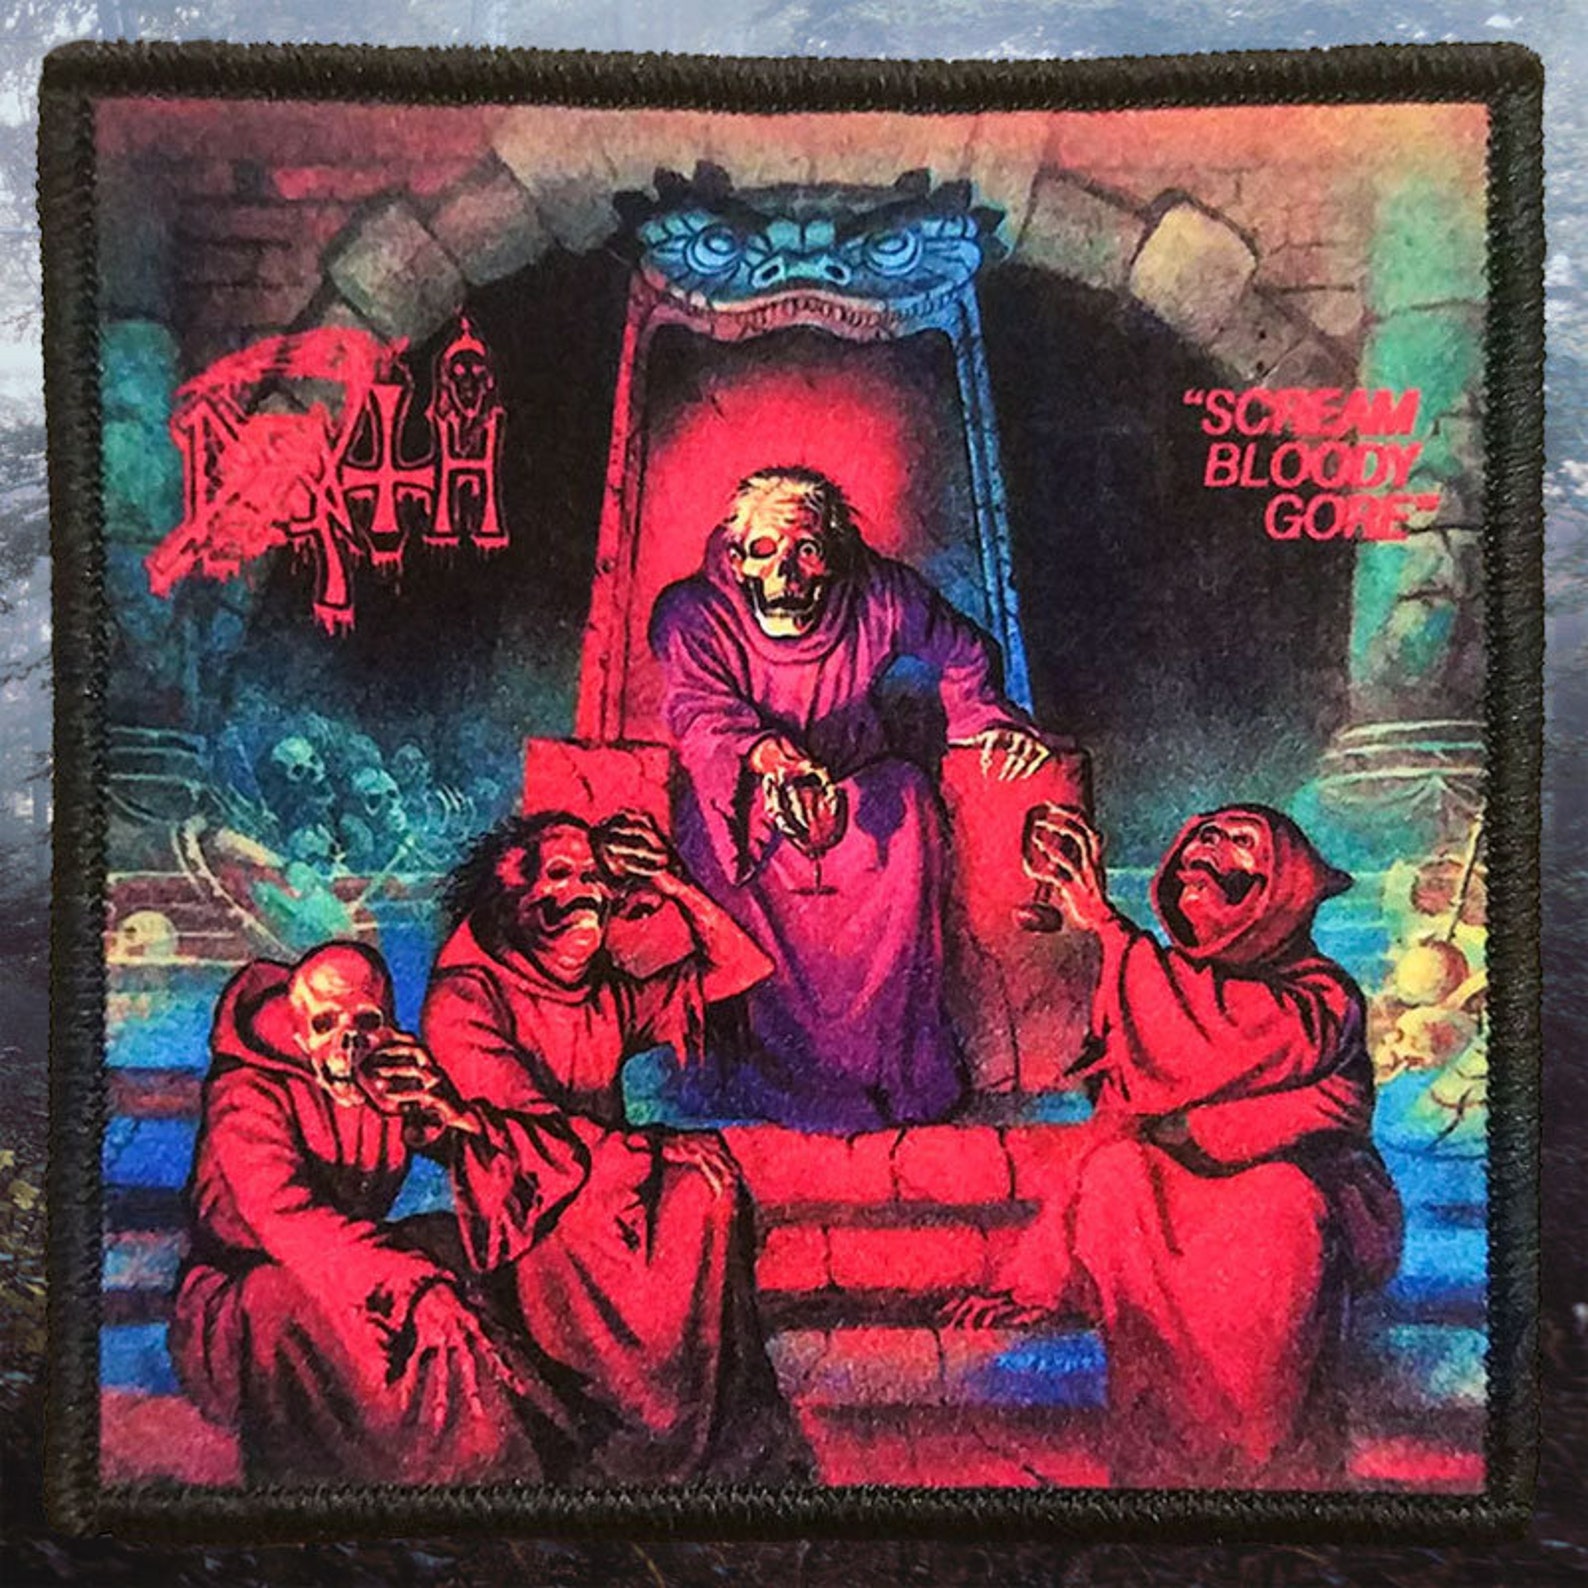 Death обложки. Death Scream Bloody Gore обложка альбома.